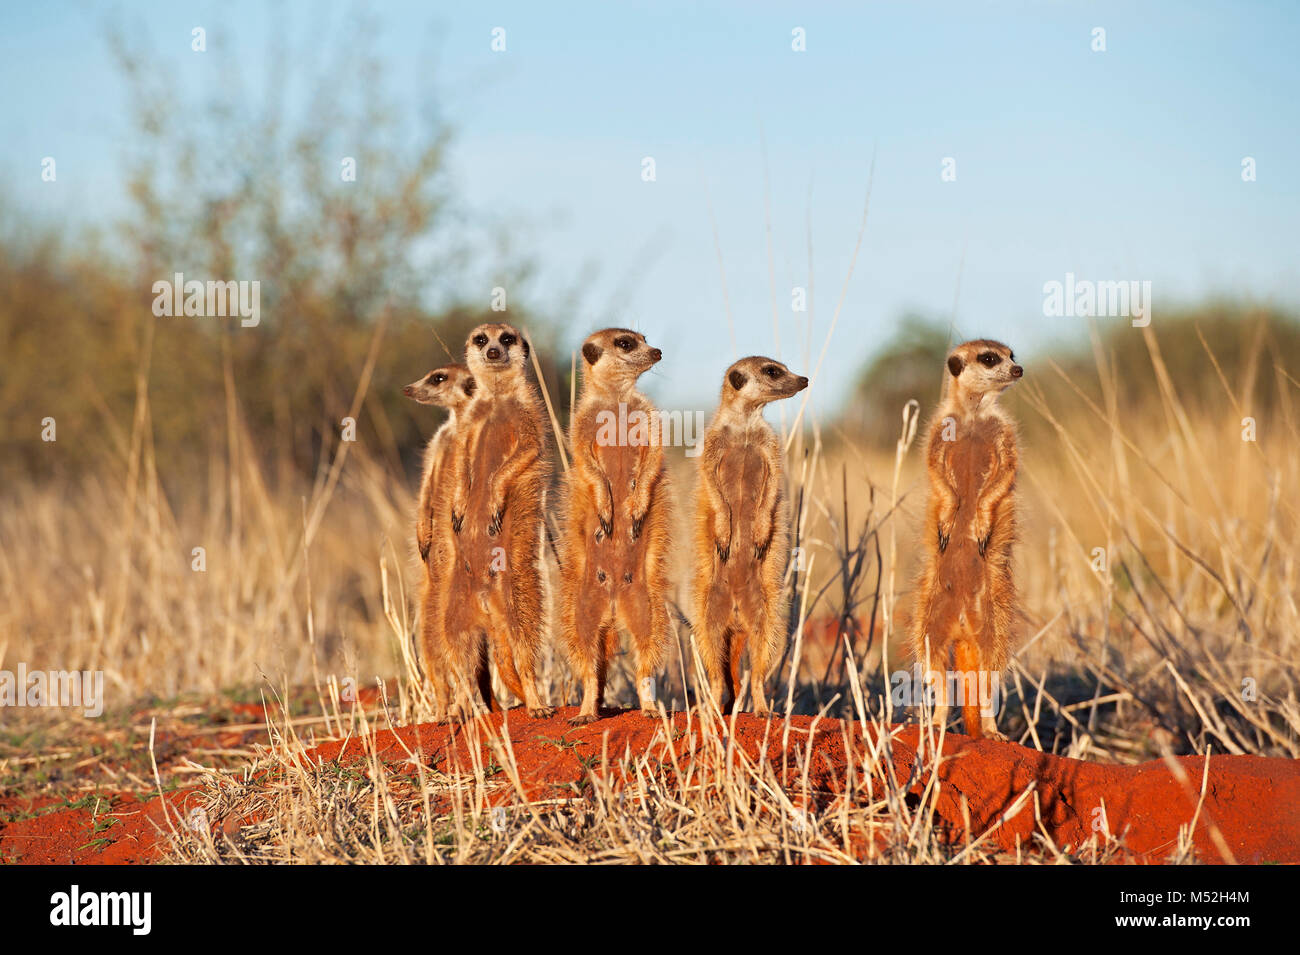 Family of meerkats basking in the early morning sun. Stock Photo